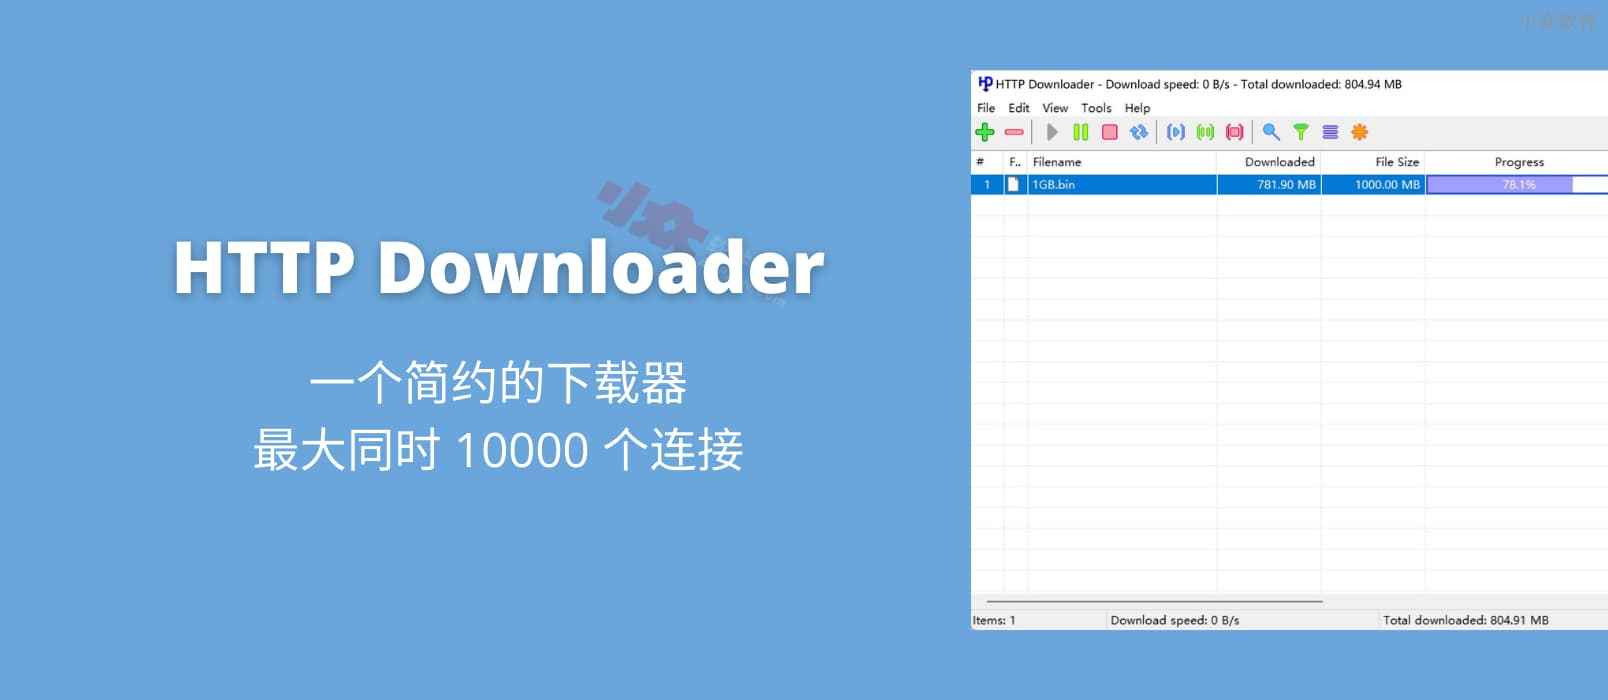 HTTP Downloader - 一个简约的下载器，最大 10000 个连接，支持 Chrome/Firefox 扩展[Windows]